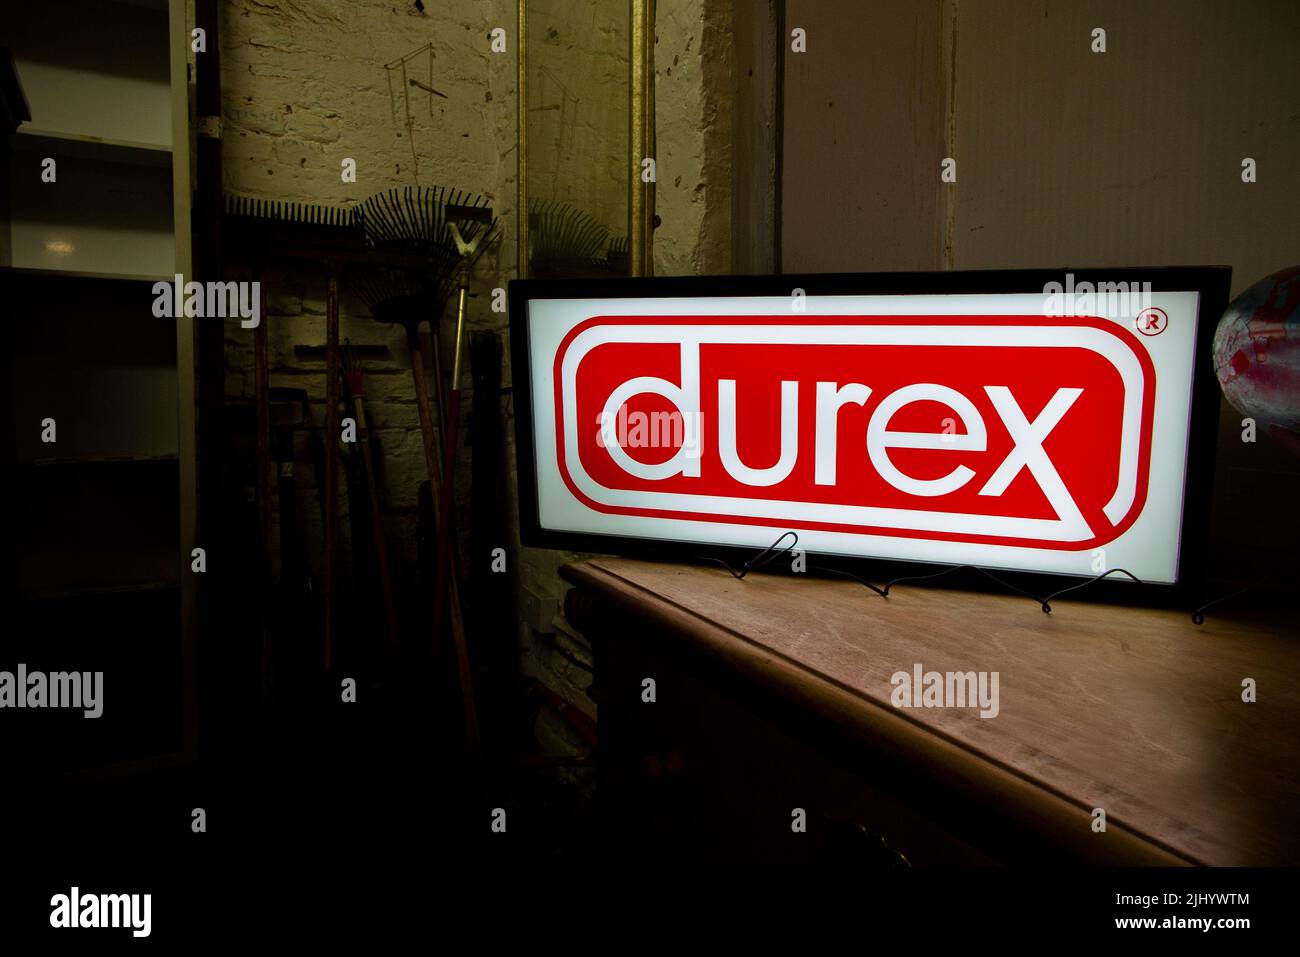 An illuminated Durex advertisment sign Stock Photo